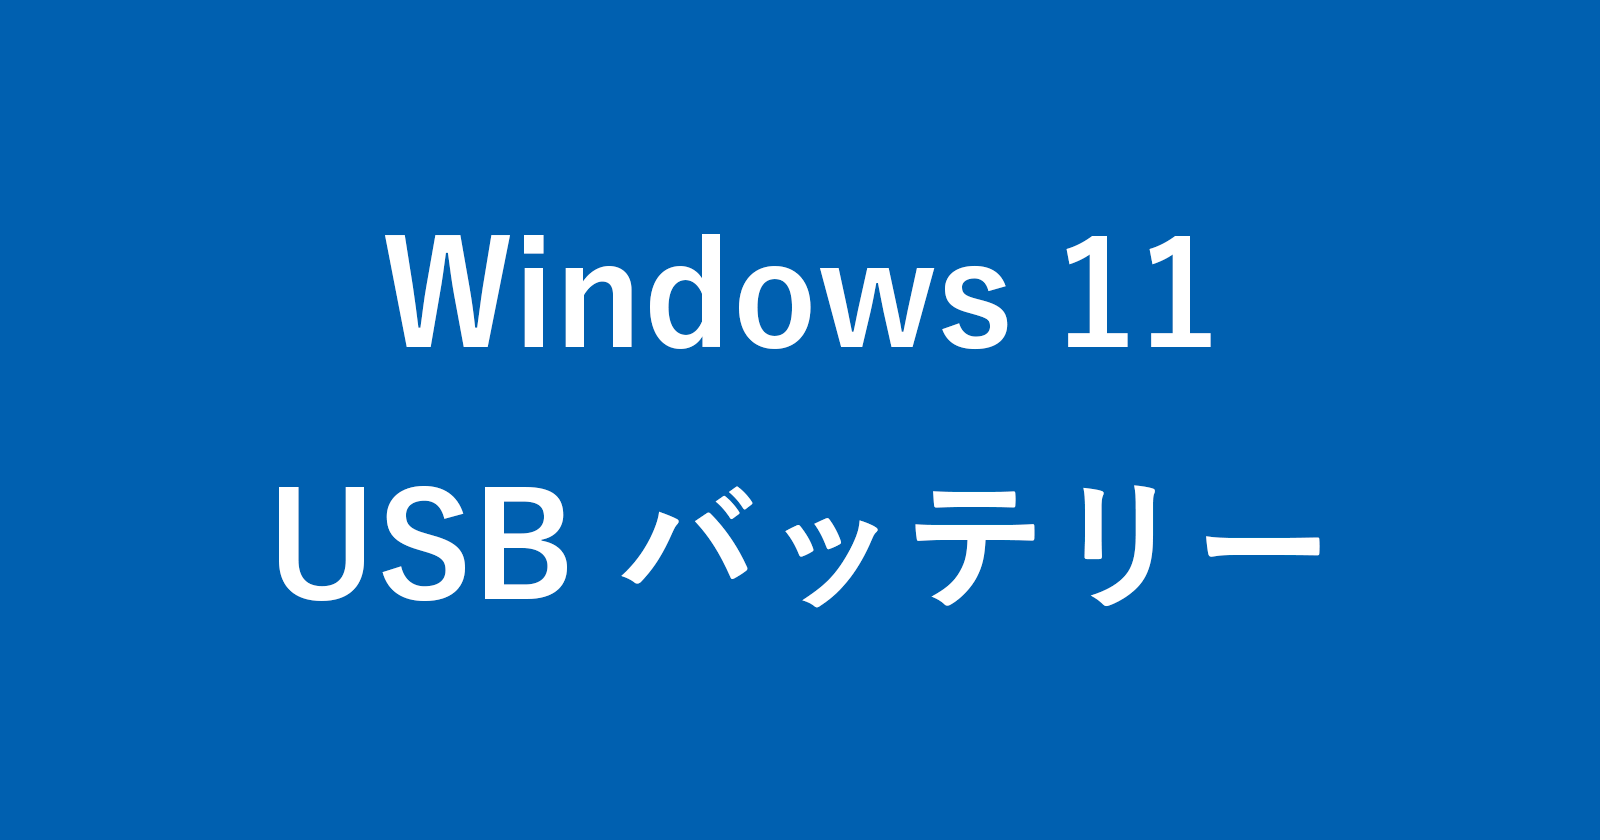 windows 11 usb battery